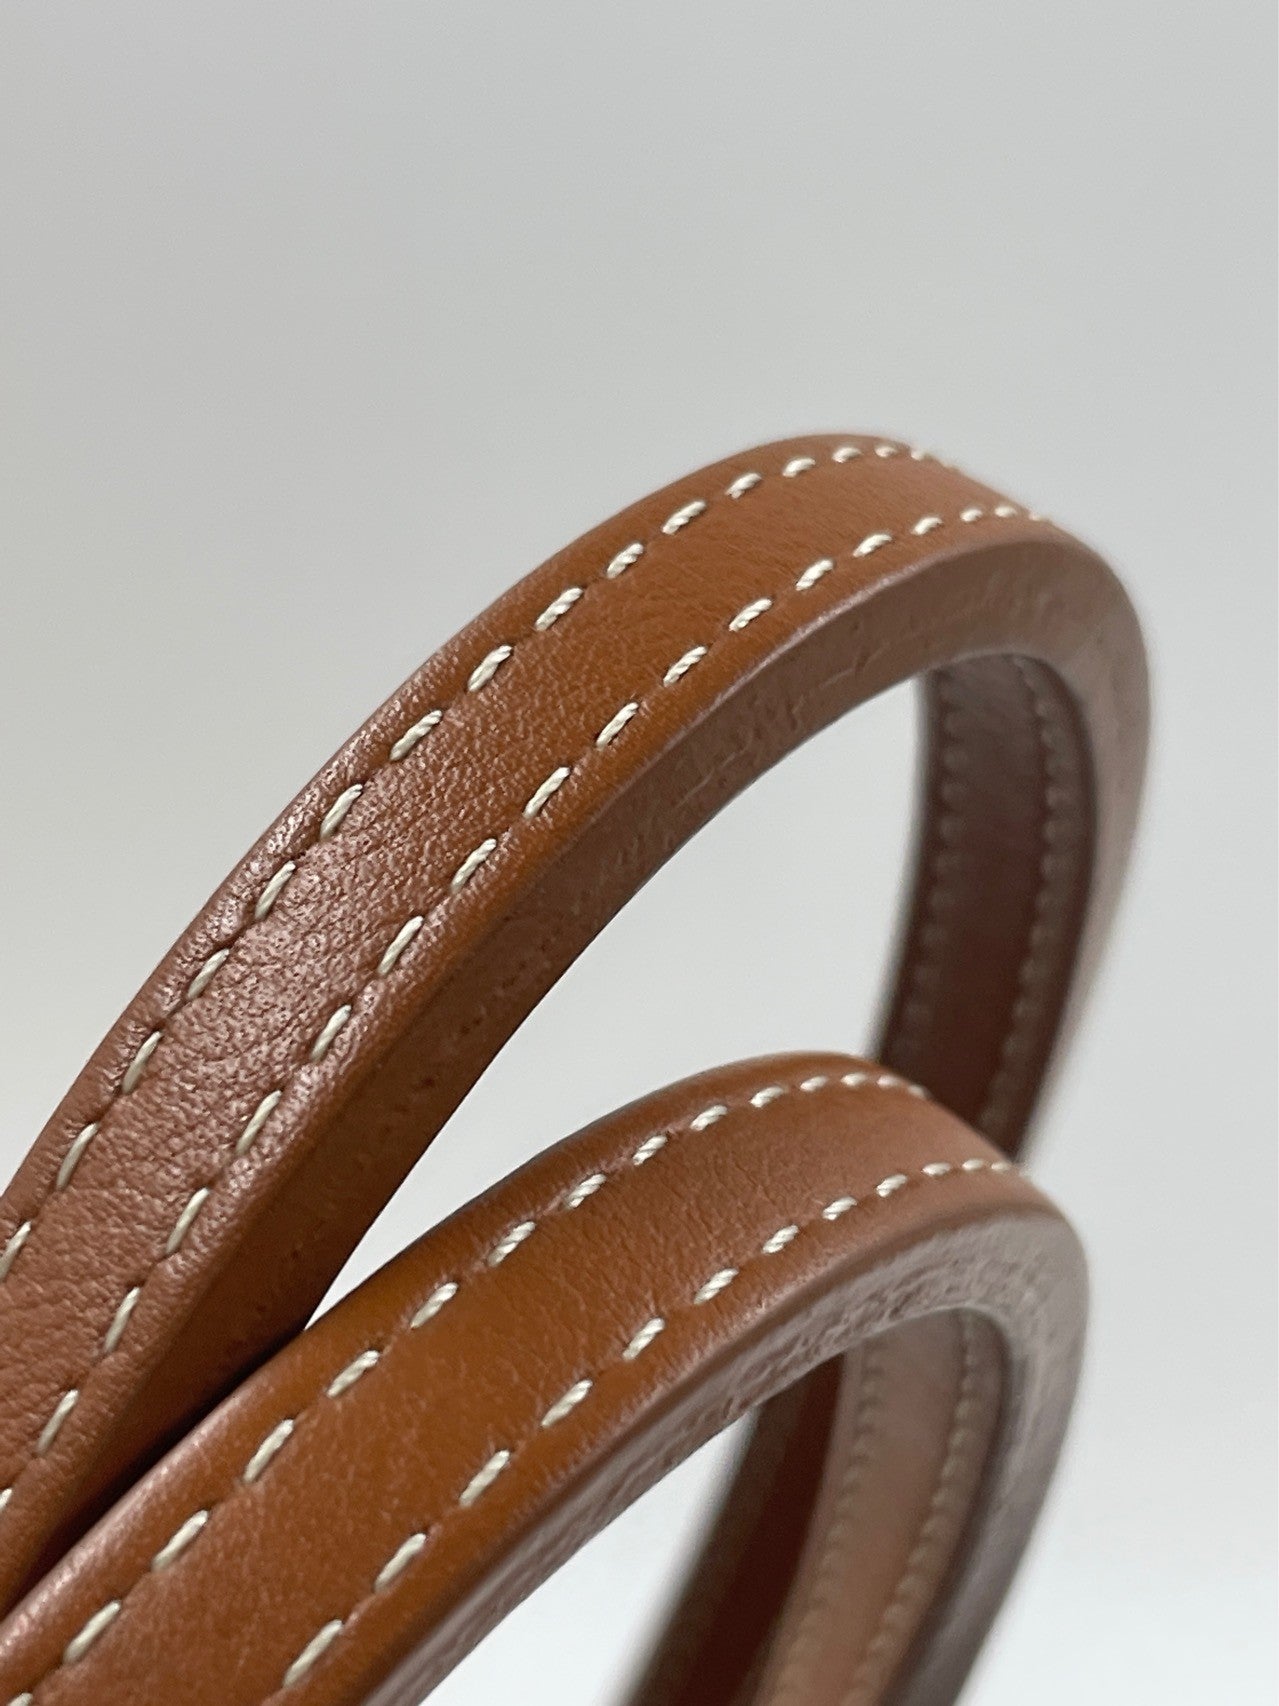 Sold Goyard Anjou Mini Tote Brown leather